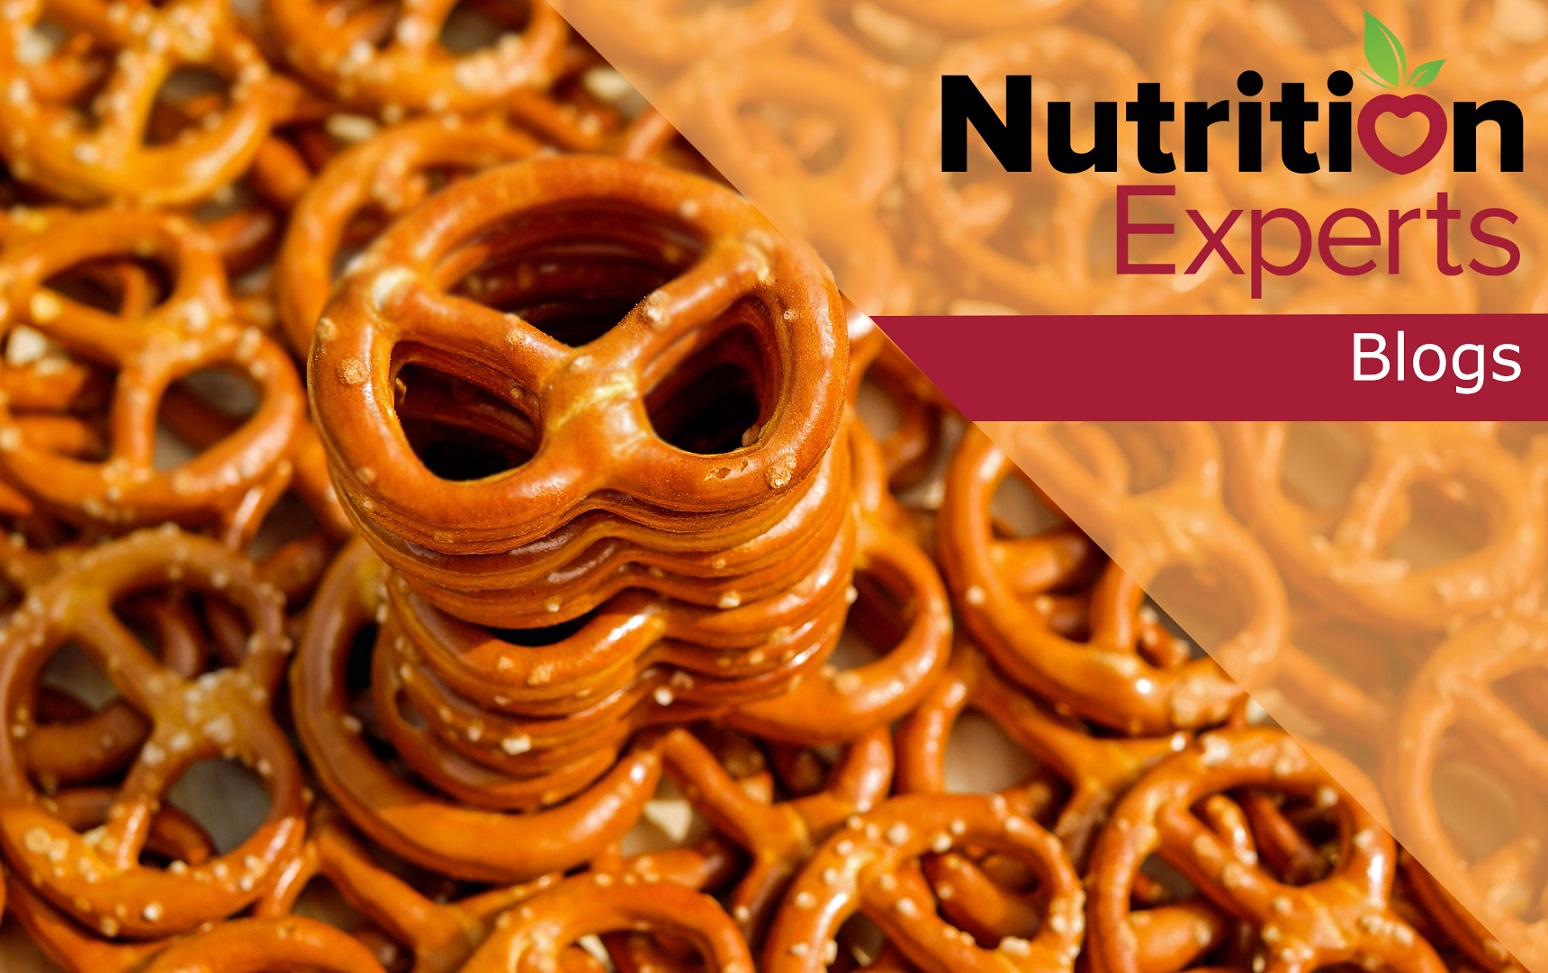 Nutrition Experts blog logo with salted pretzels